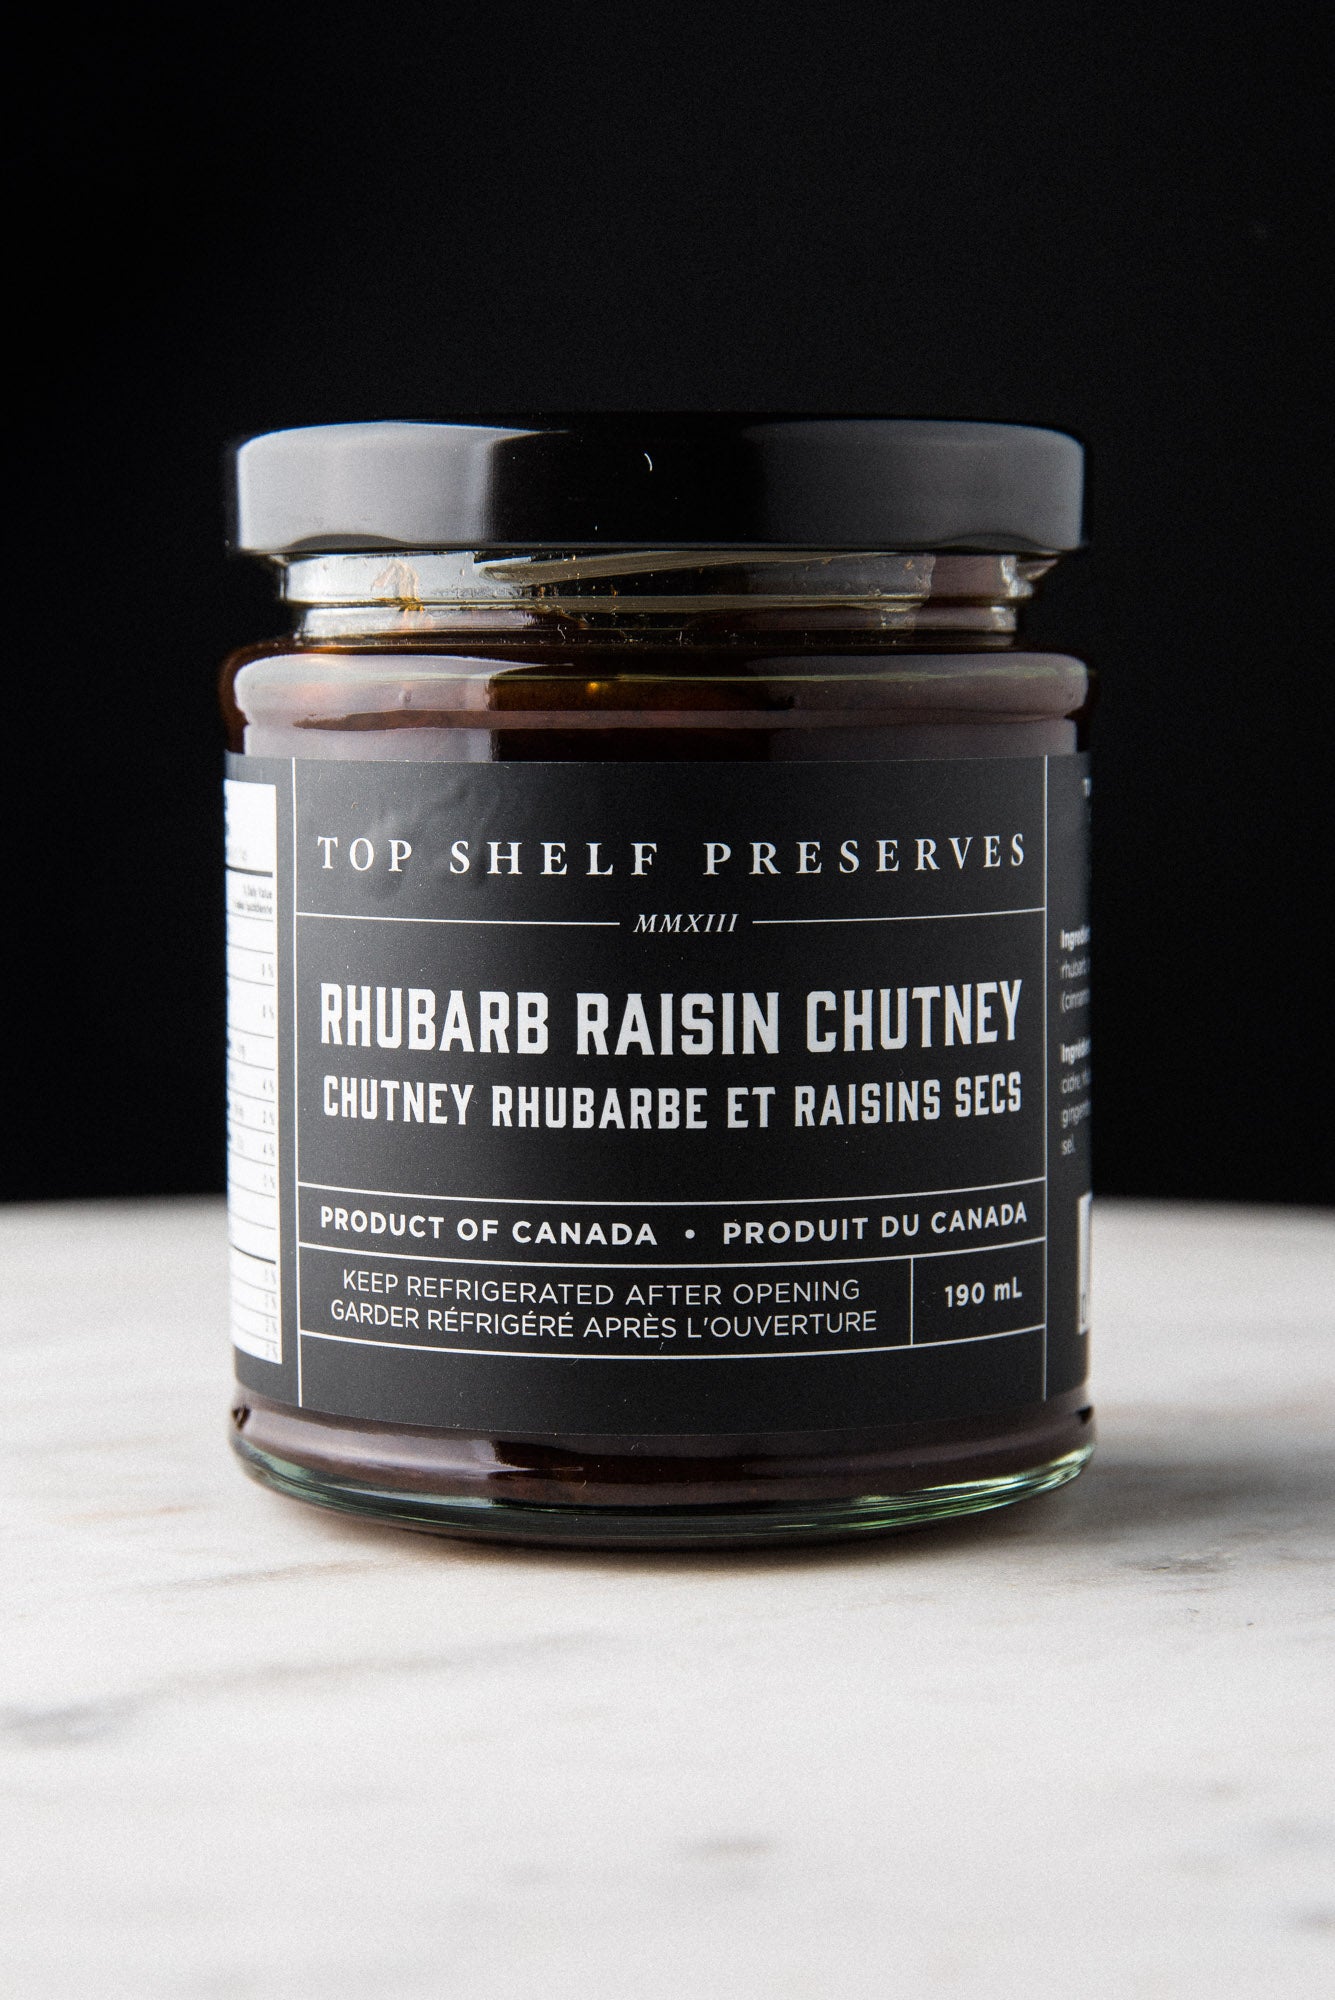 Rhubarb Raisin Chutney - Top Shelf Preserves